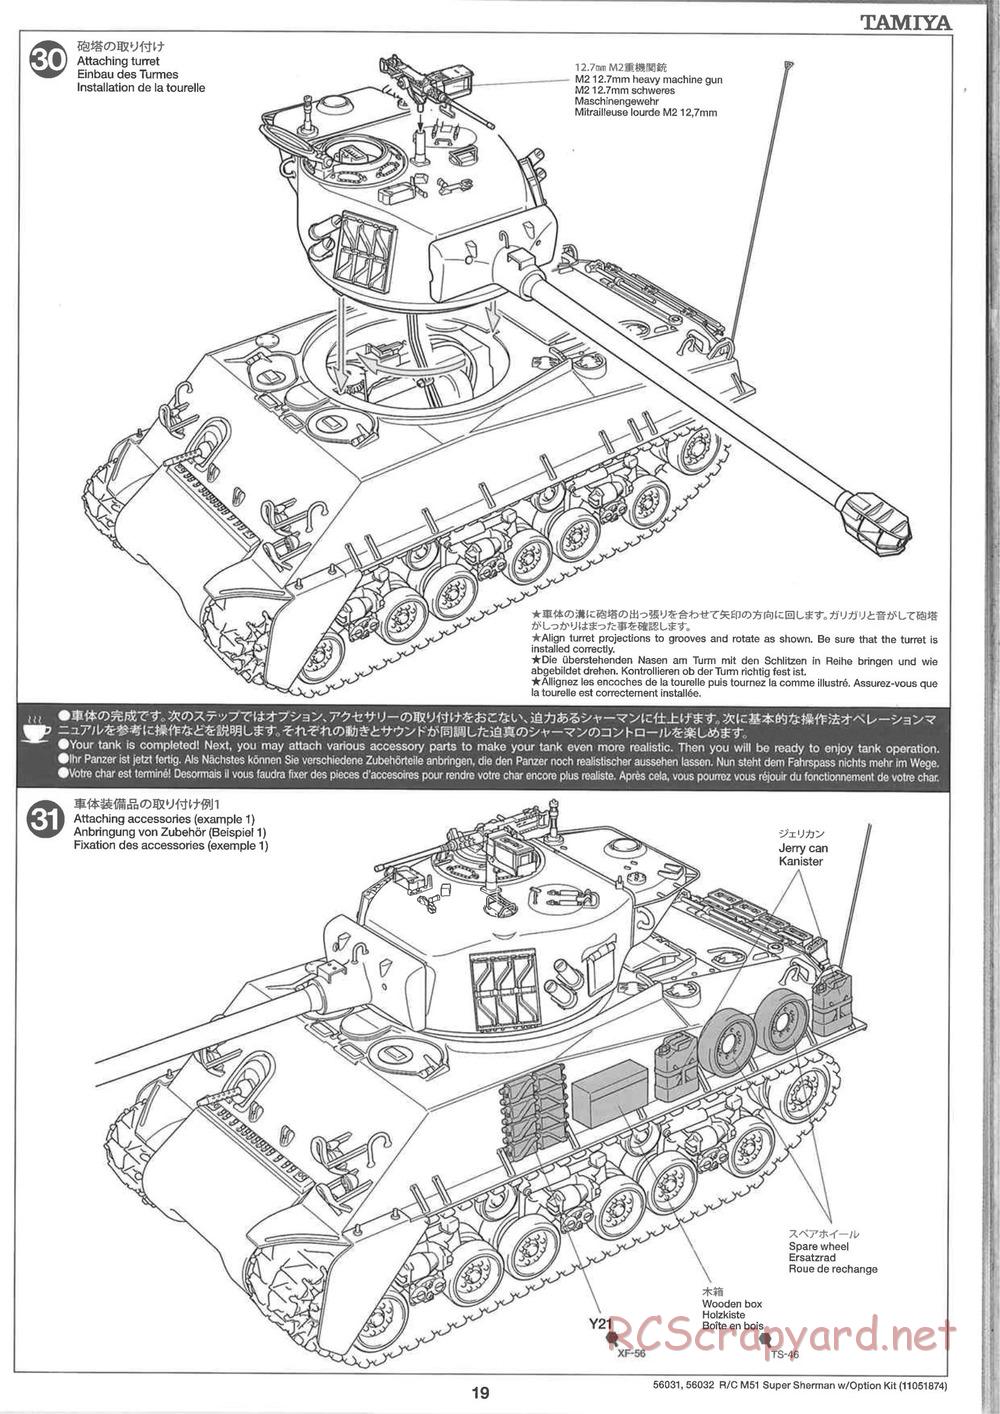 Tamiya - Super Sherman M-51 - 1/16 Scale Chassis - Manual - Page 19